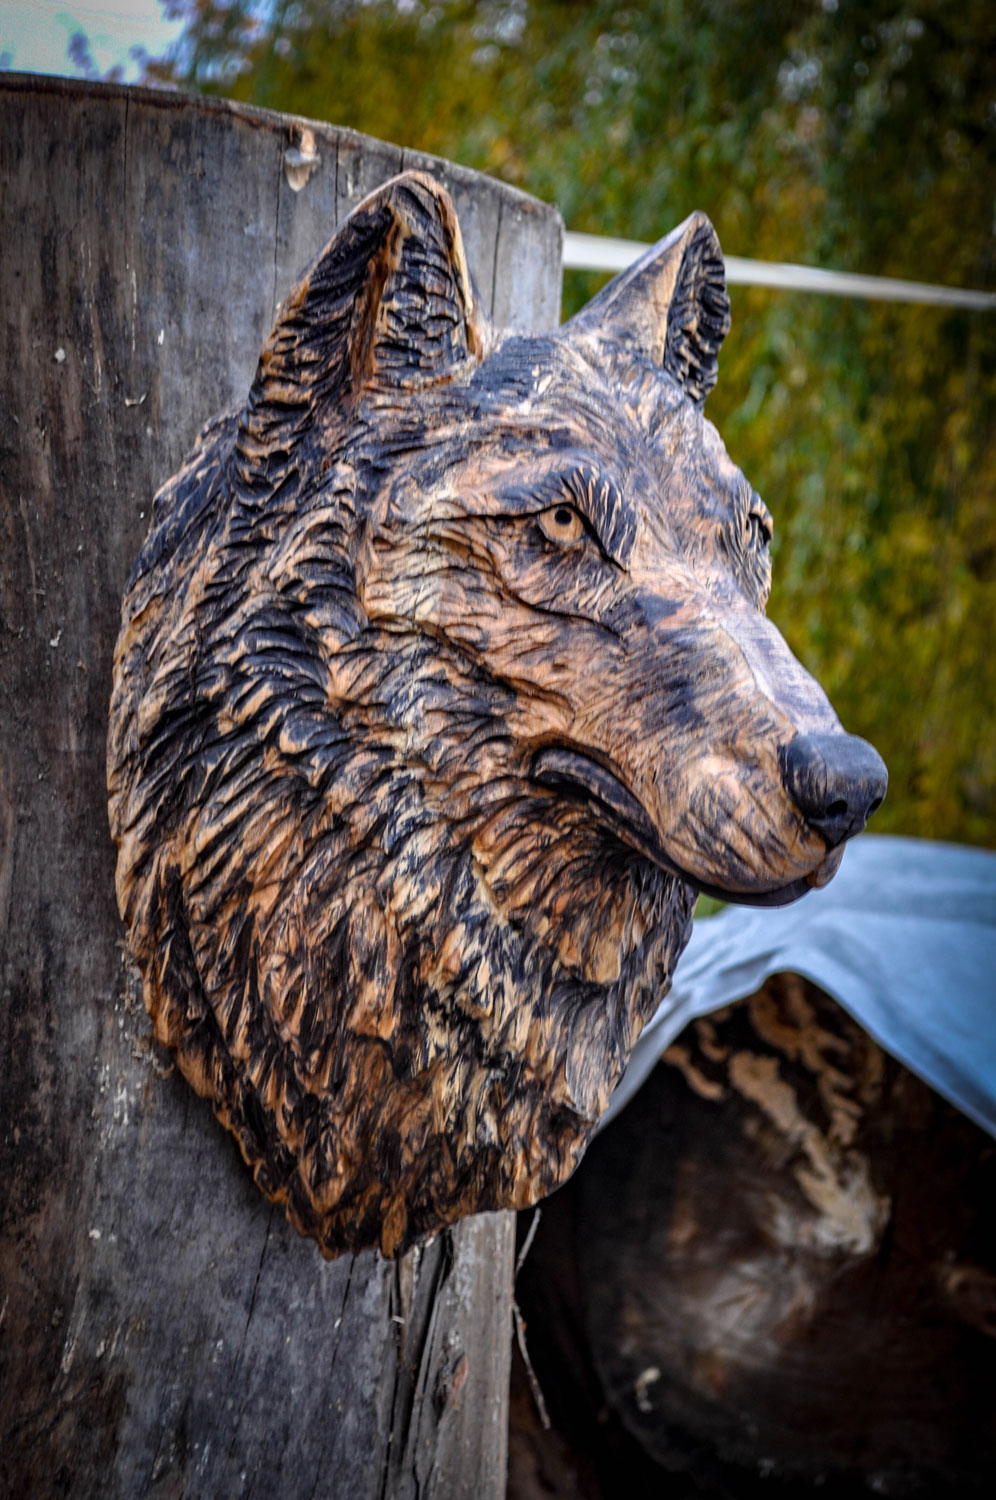 drevorezba-carving-wood-drevo-busta-vlk-hlava-vyrezavani-rezbar-radekzdrazil-20201102-02